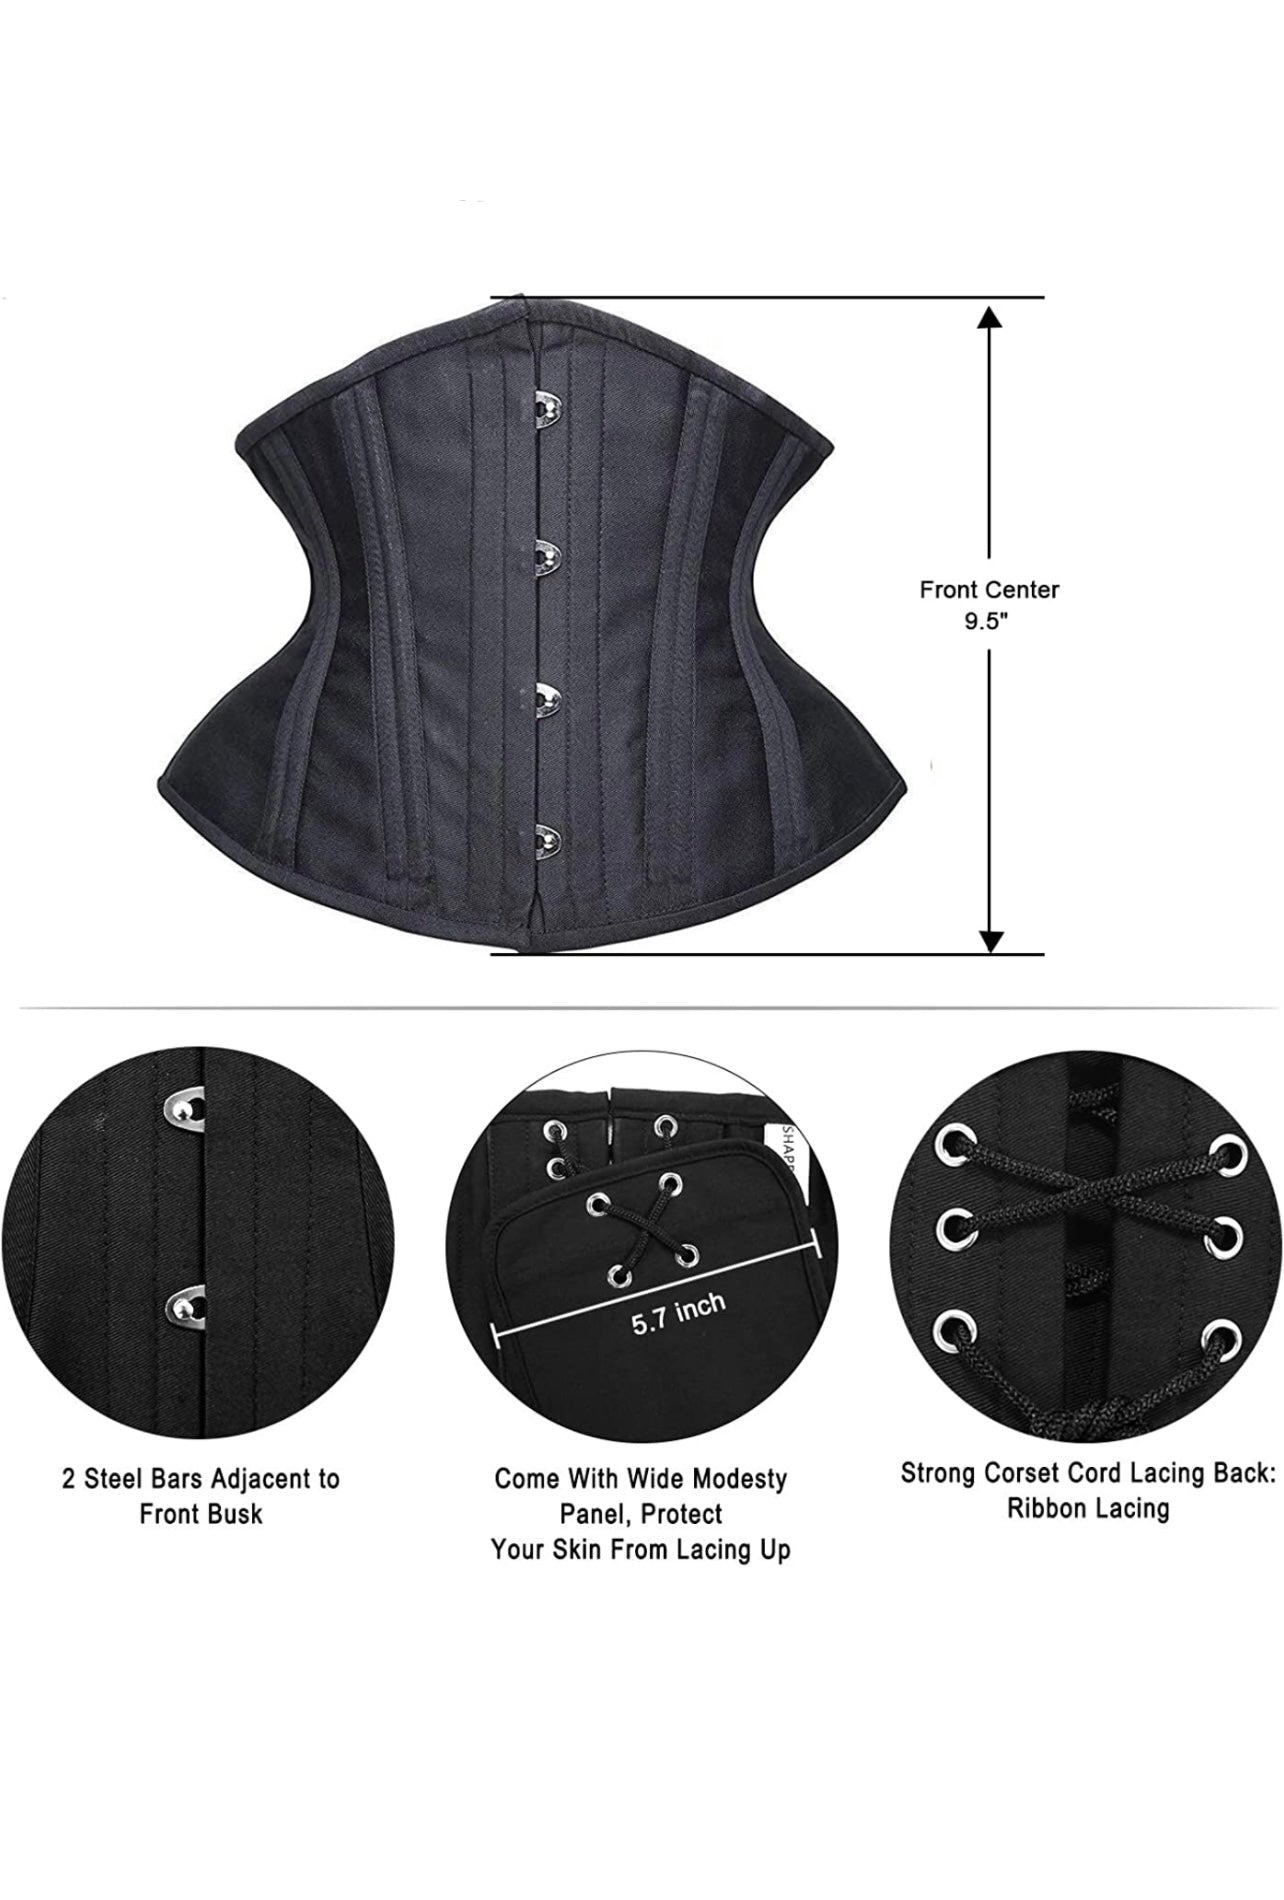 Hourglass (short torso) corset